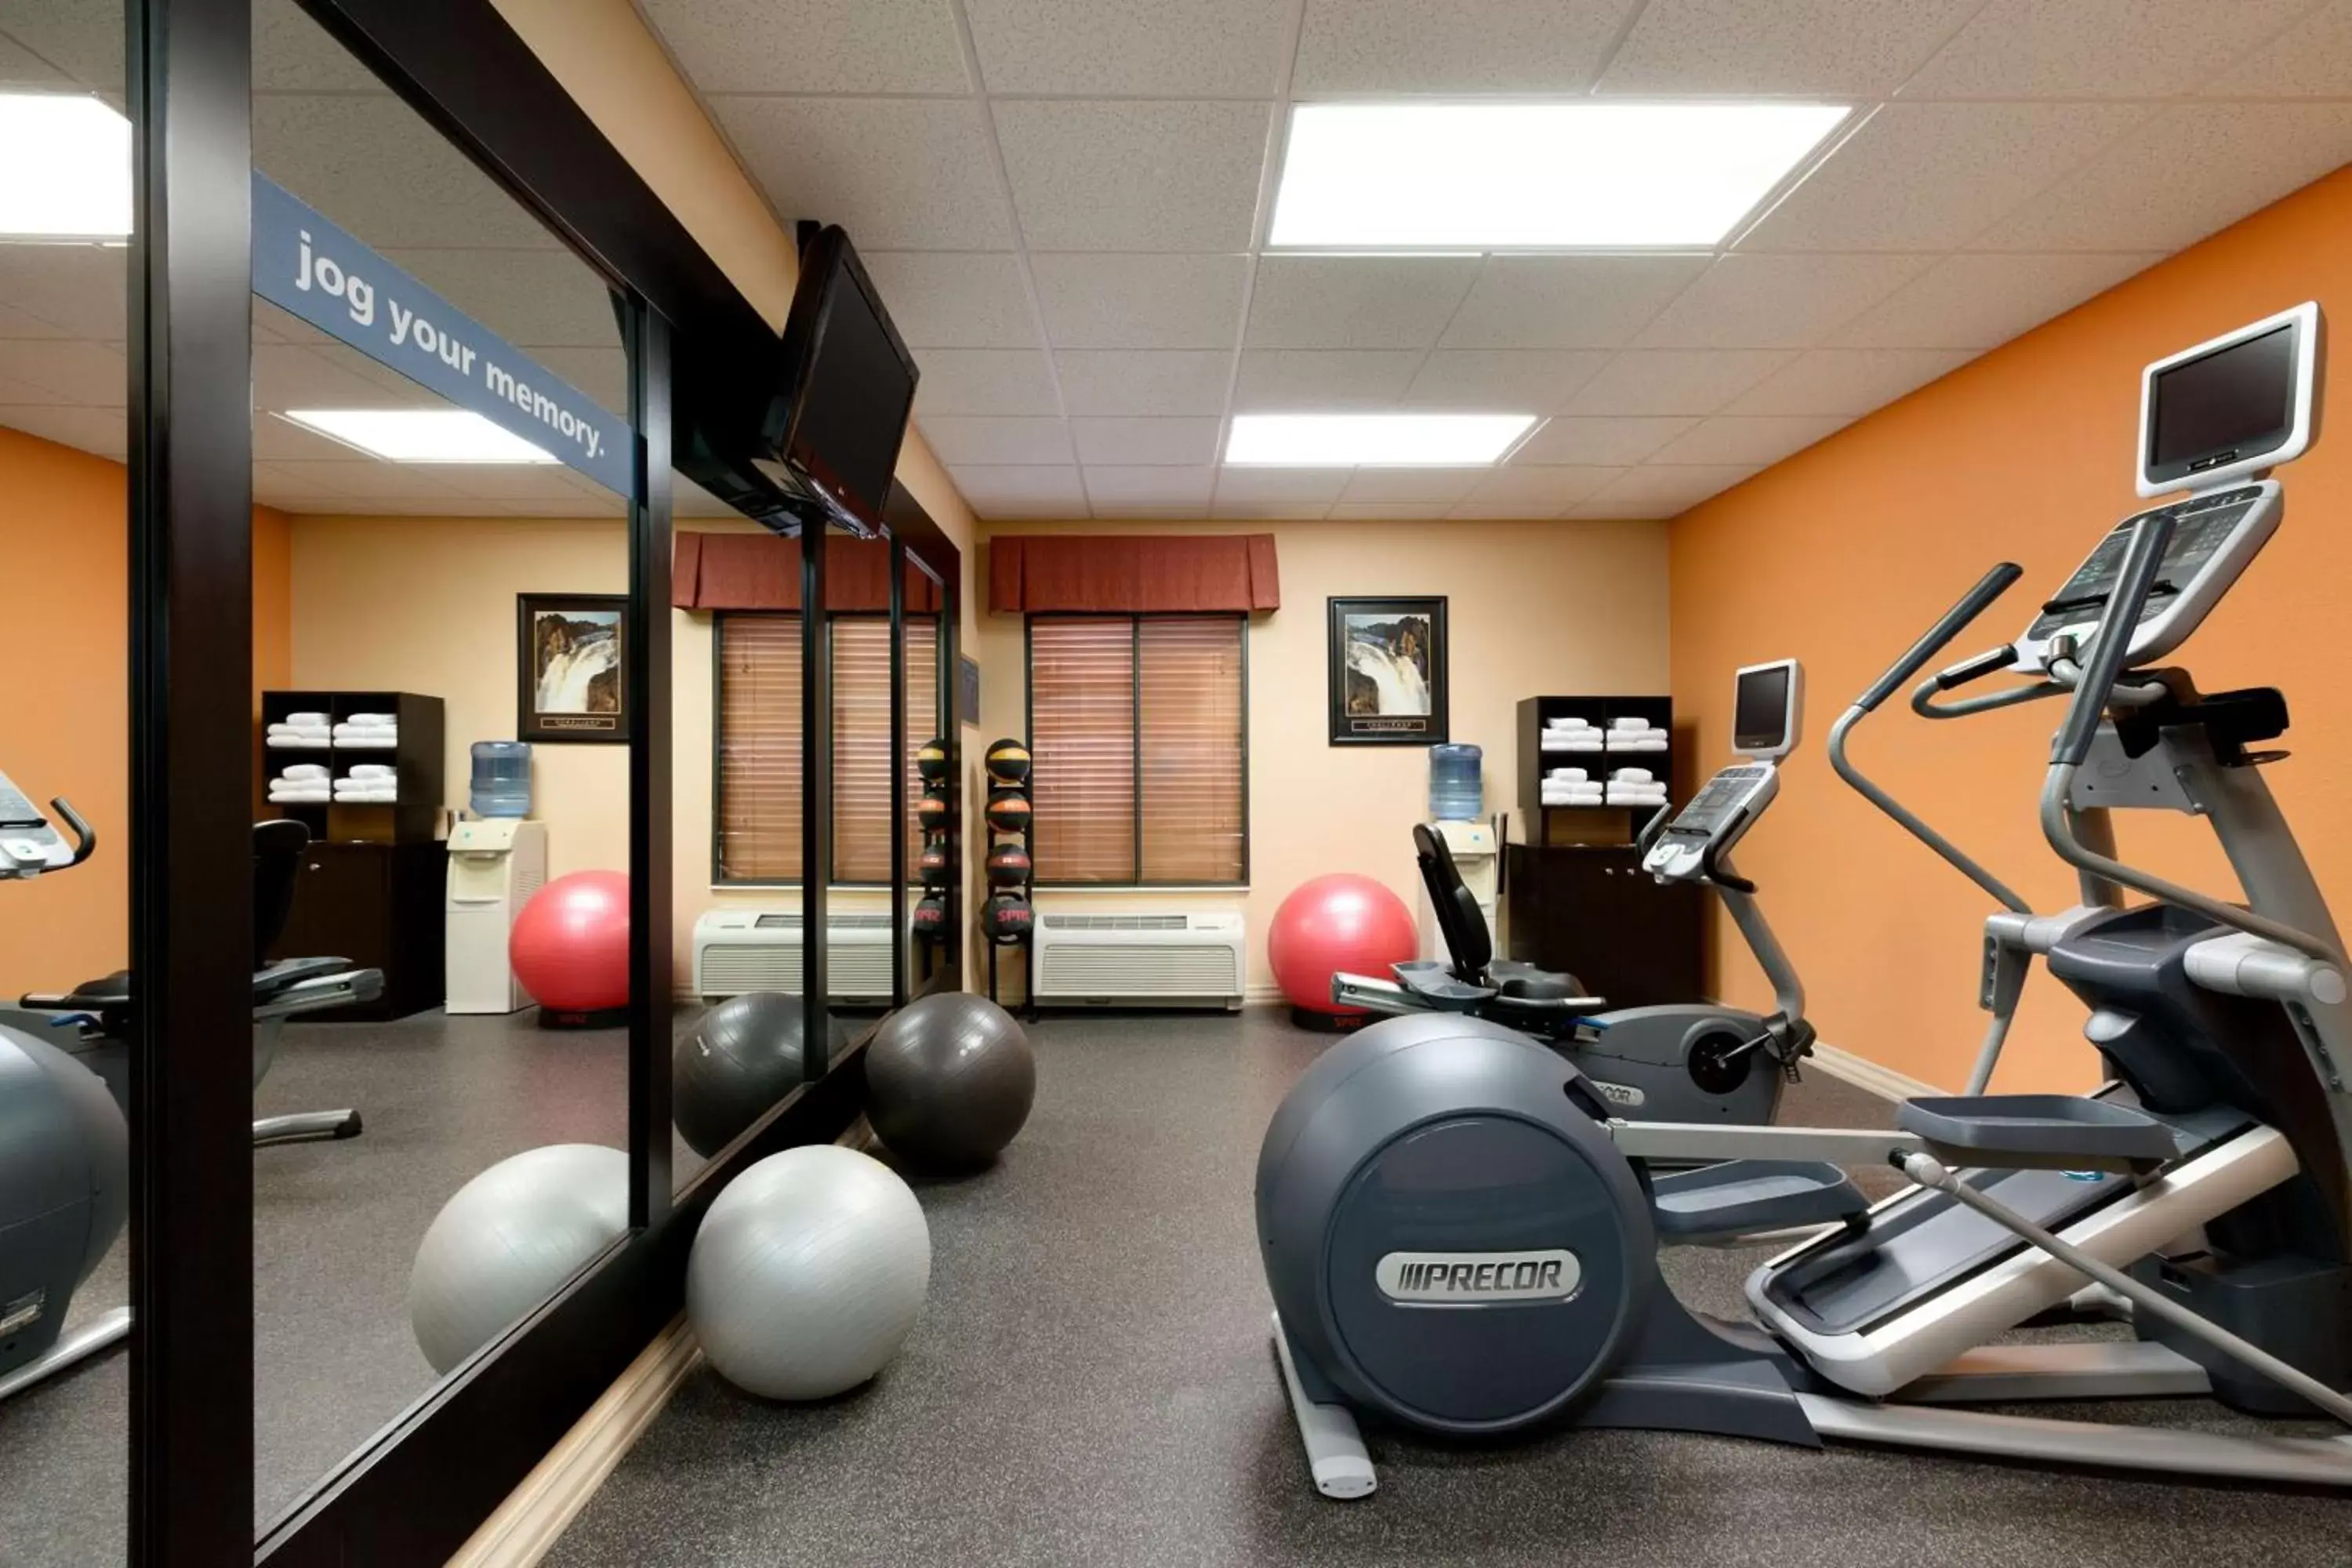 Fitness centre/facilities, Fitness Center/Facilities in Hampton Inn Longmont